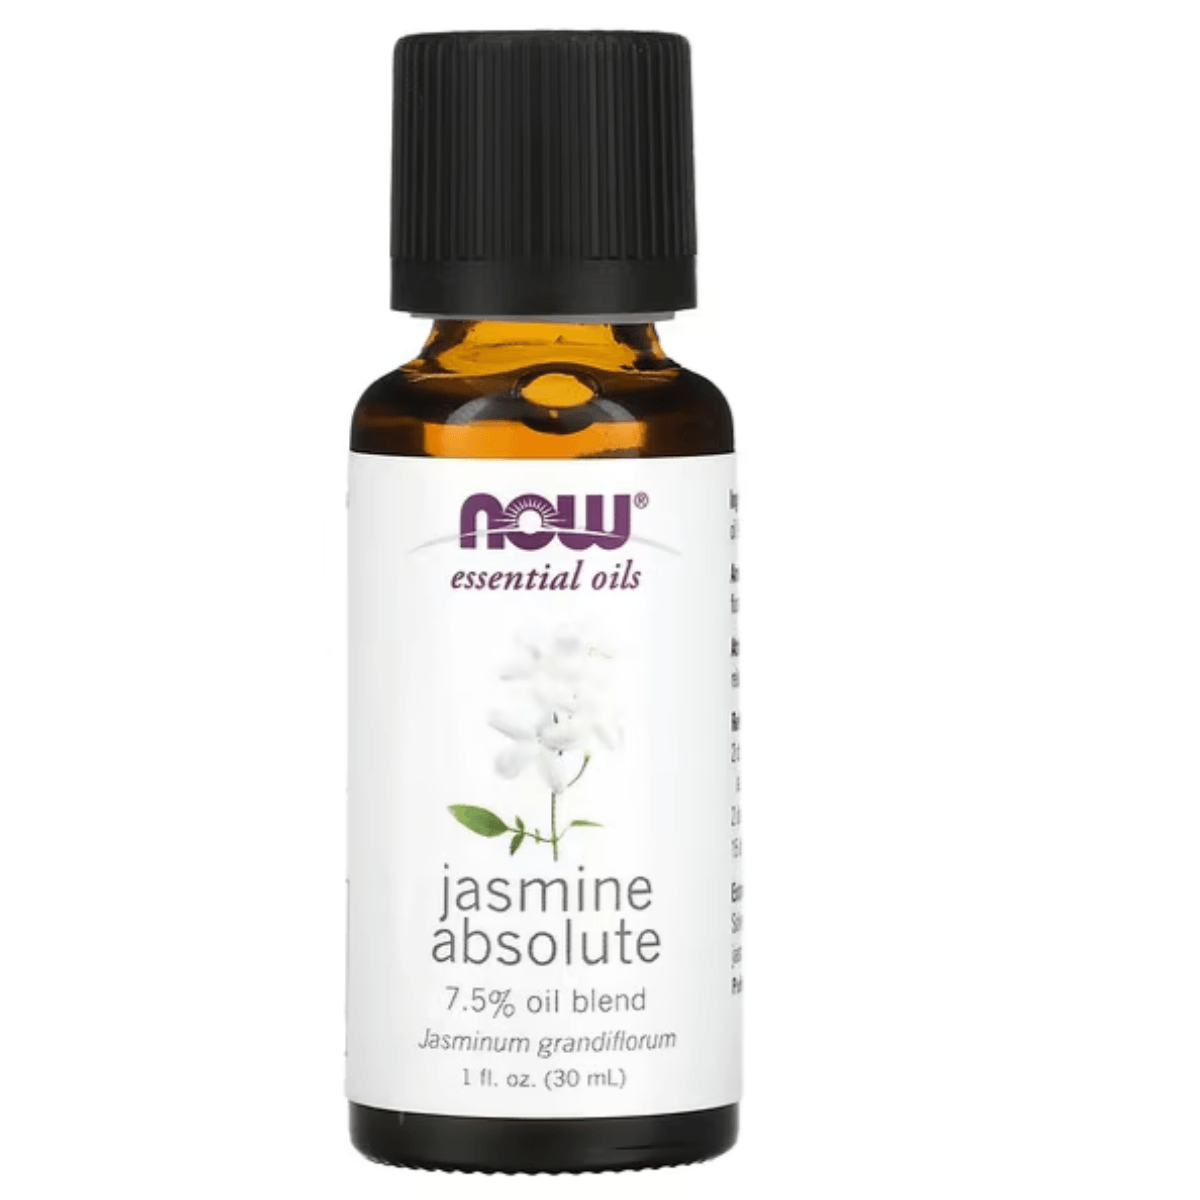 NOW Jasmine Absolute Oil 30ML Essential Oils at Village Vitamin Store